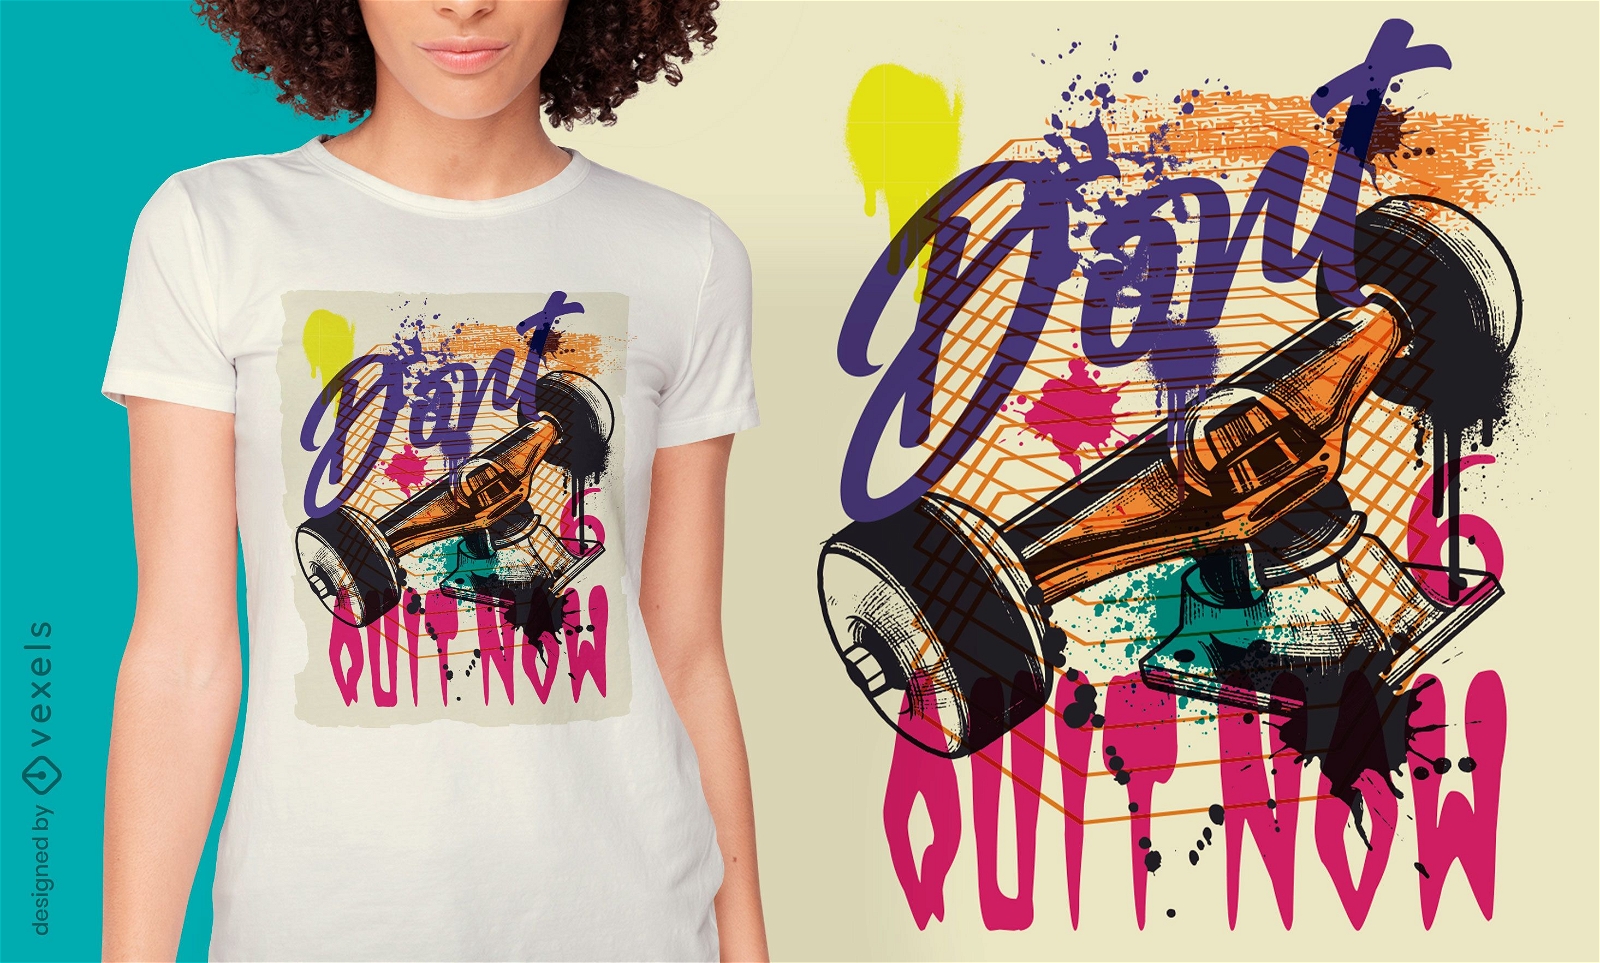 Diseño de camiseta de graffiti urbano de skate truck.